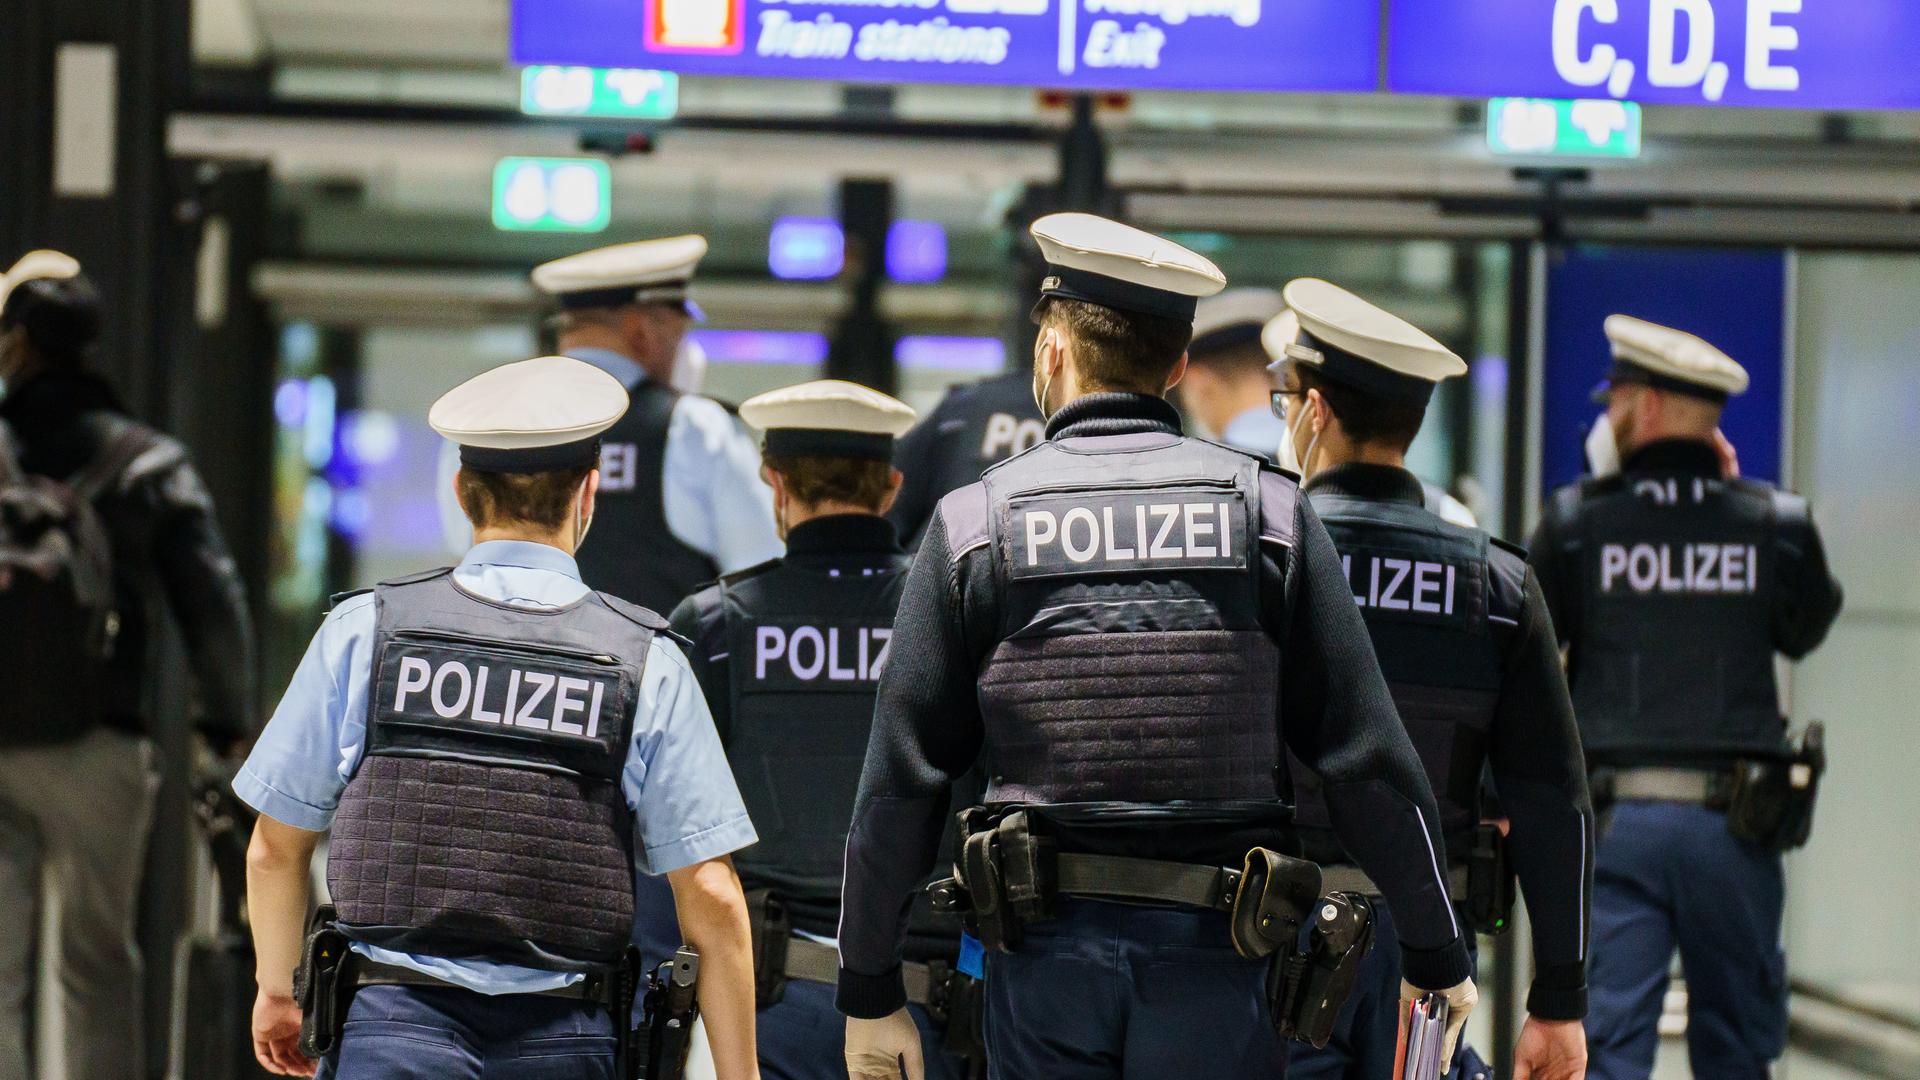 Flughafen Frankfurt: Frau schmuggelt 25.000 Euro - in kuriosem